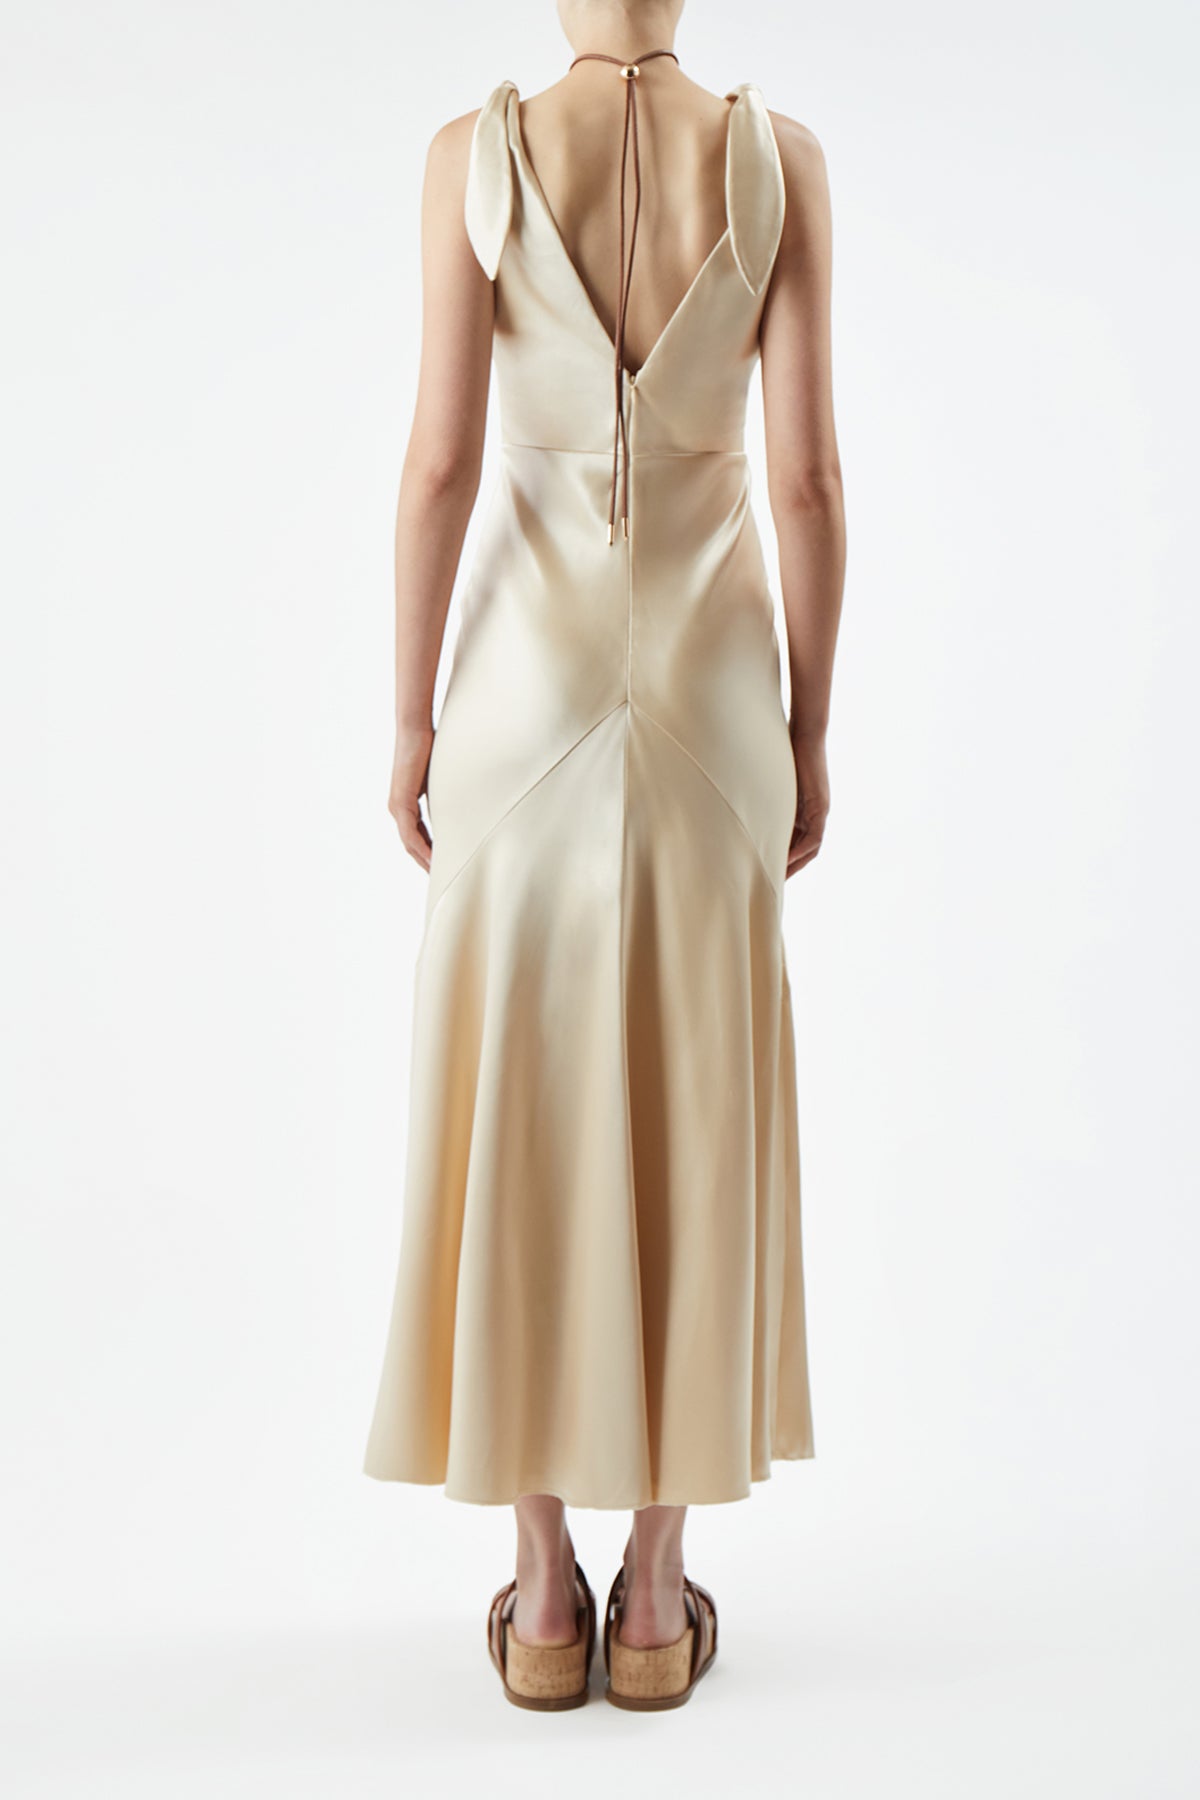 Havilland Dress in Champagne Silk